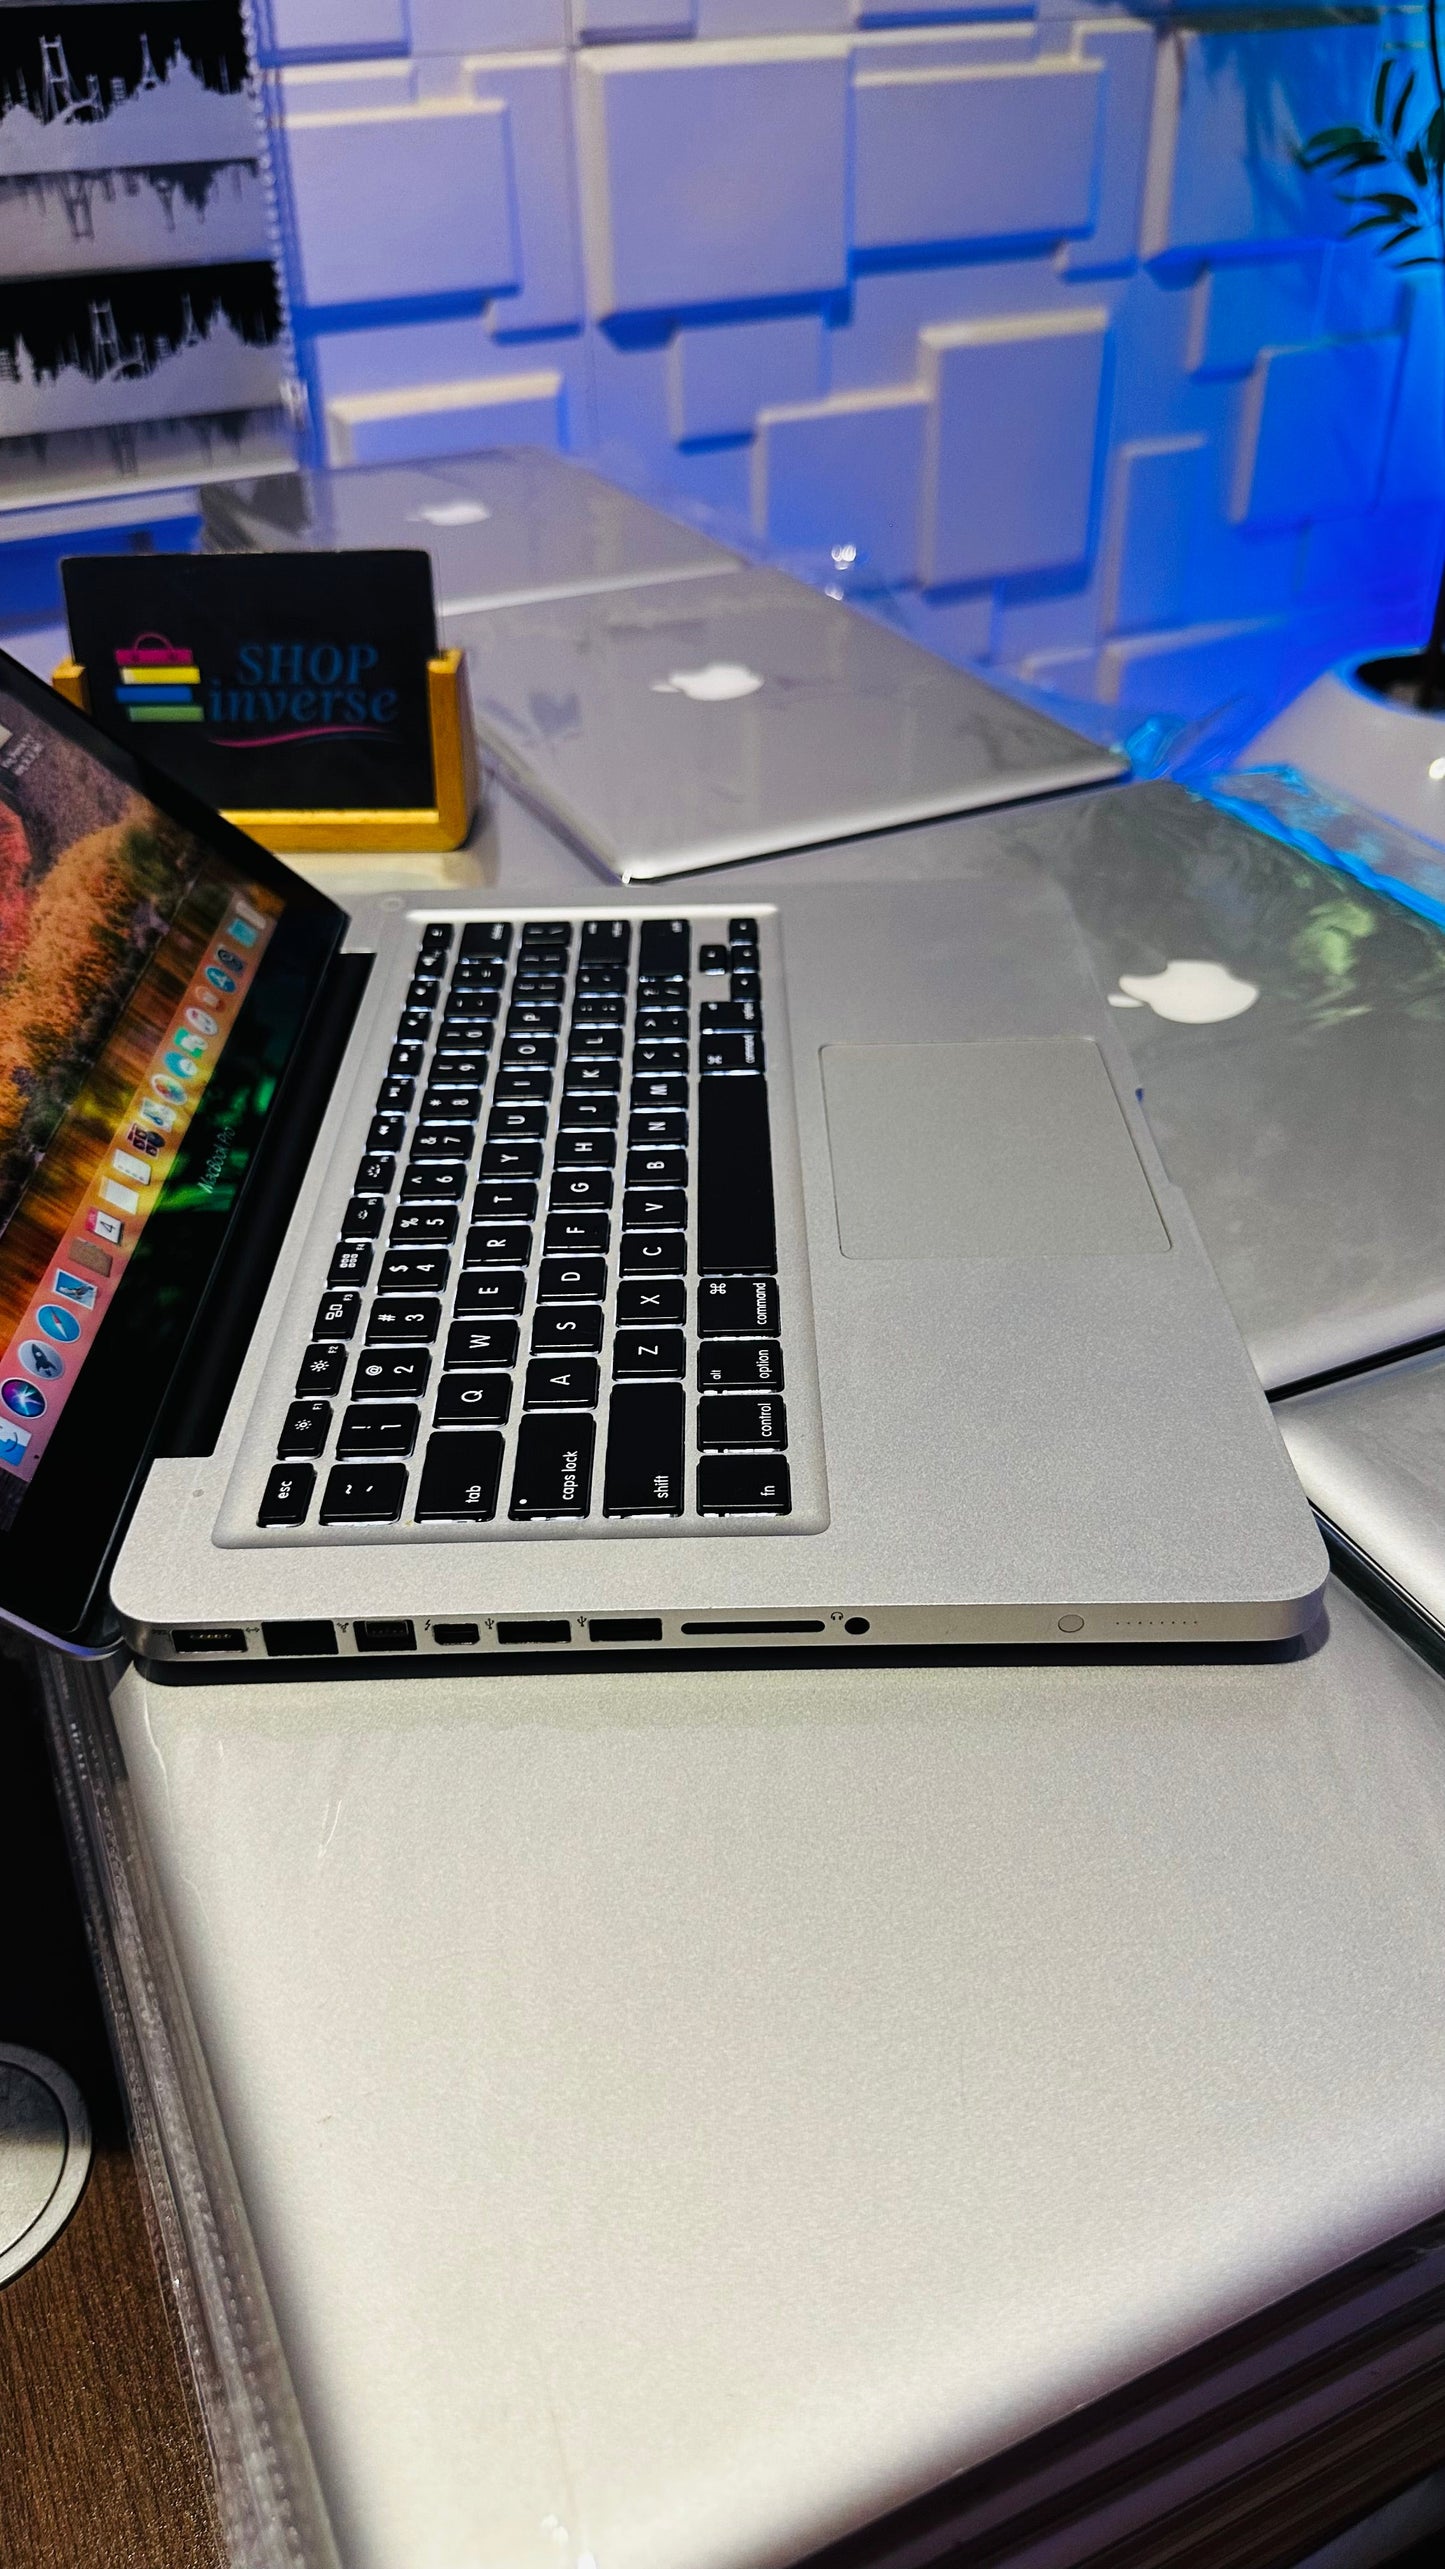 13.3 inches Apple MacBook Pro 2010 - Intel Core 2 Duo - 500GB HDD - 4GB RAM - Keypad Light